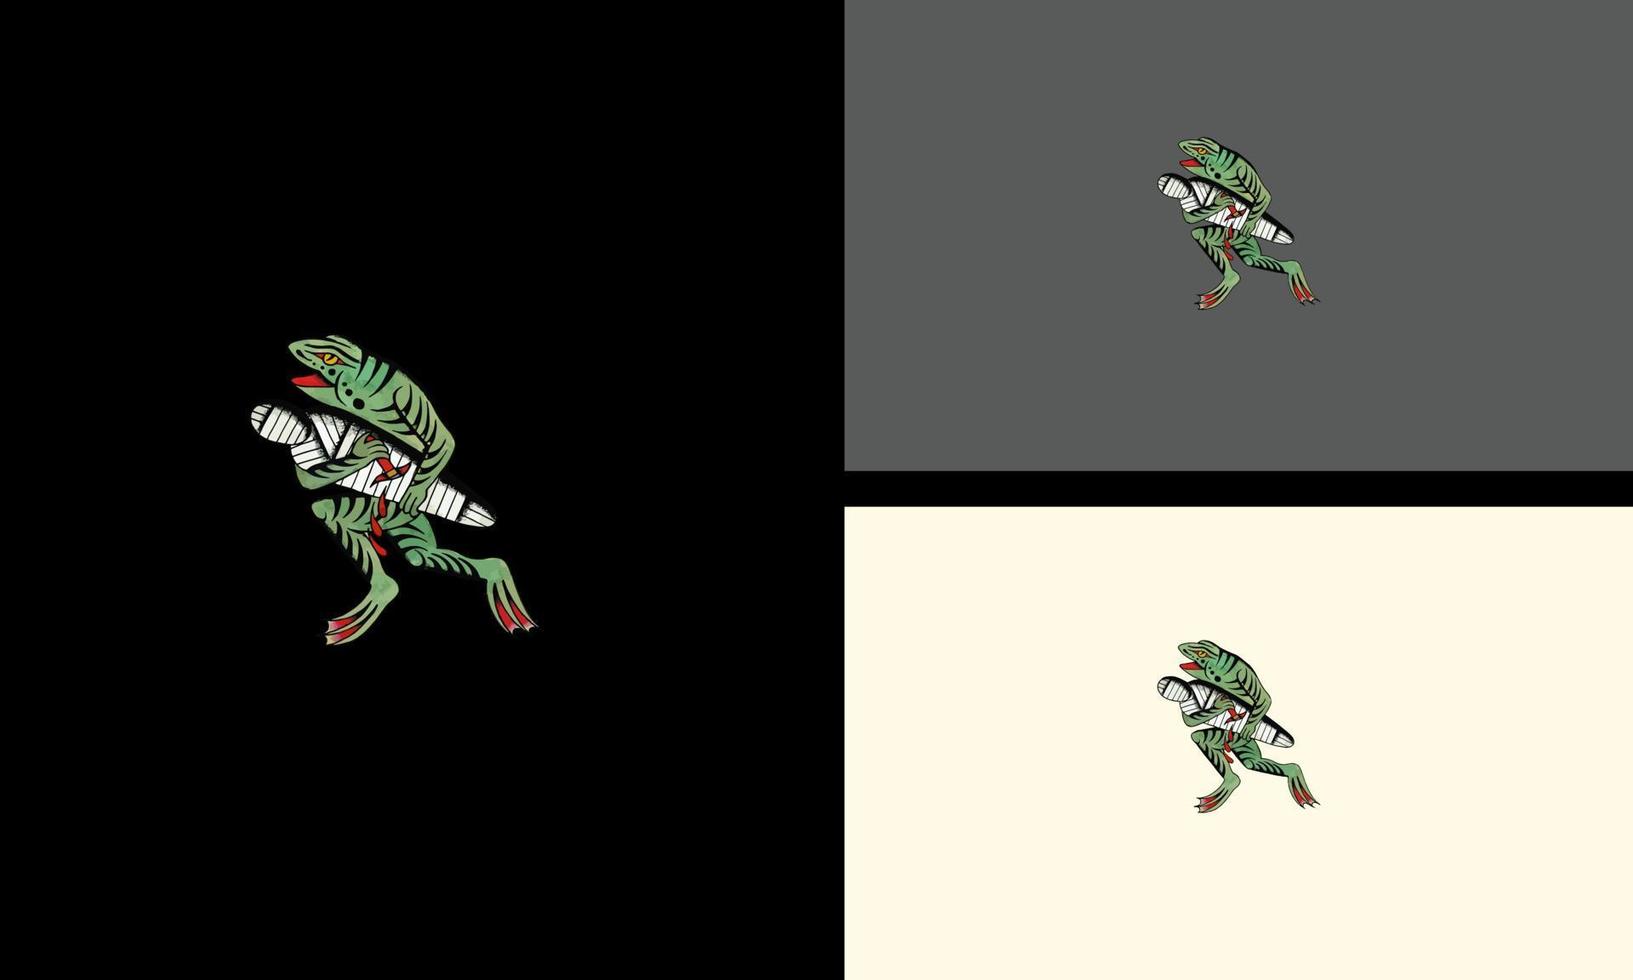 groen kikker rennen vector artwork ontwerp